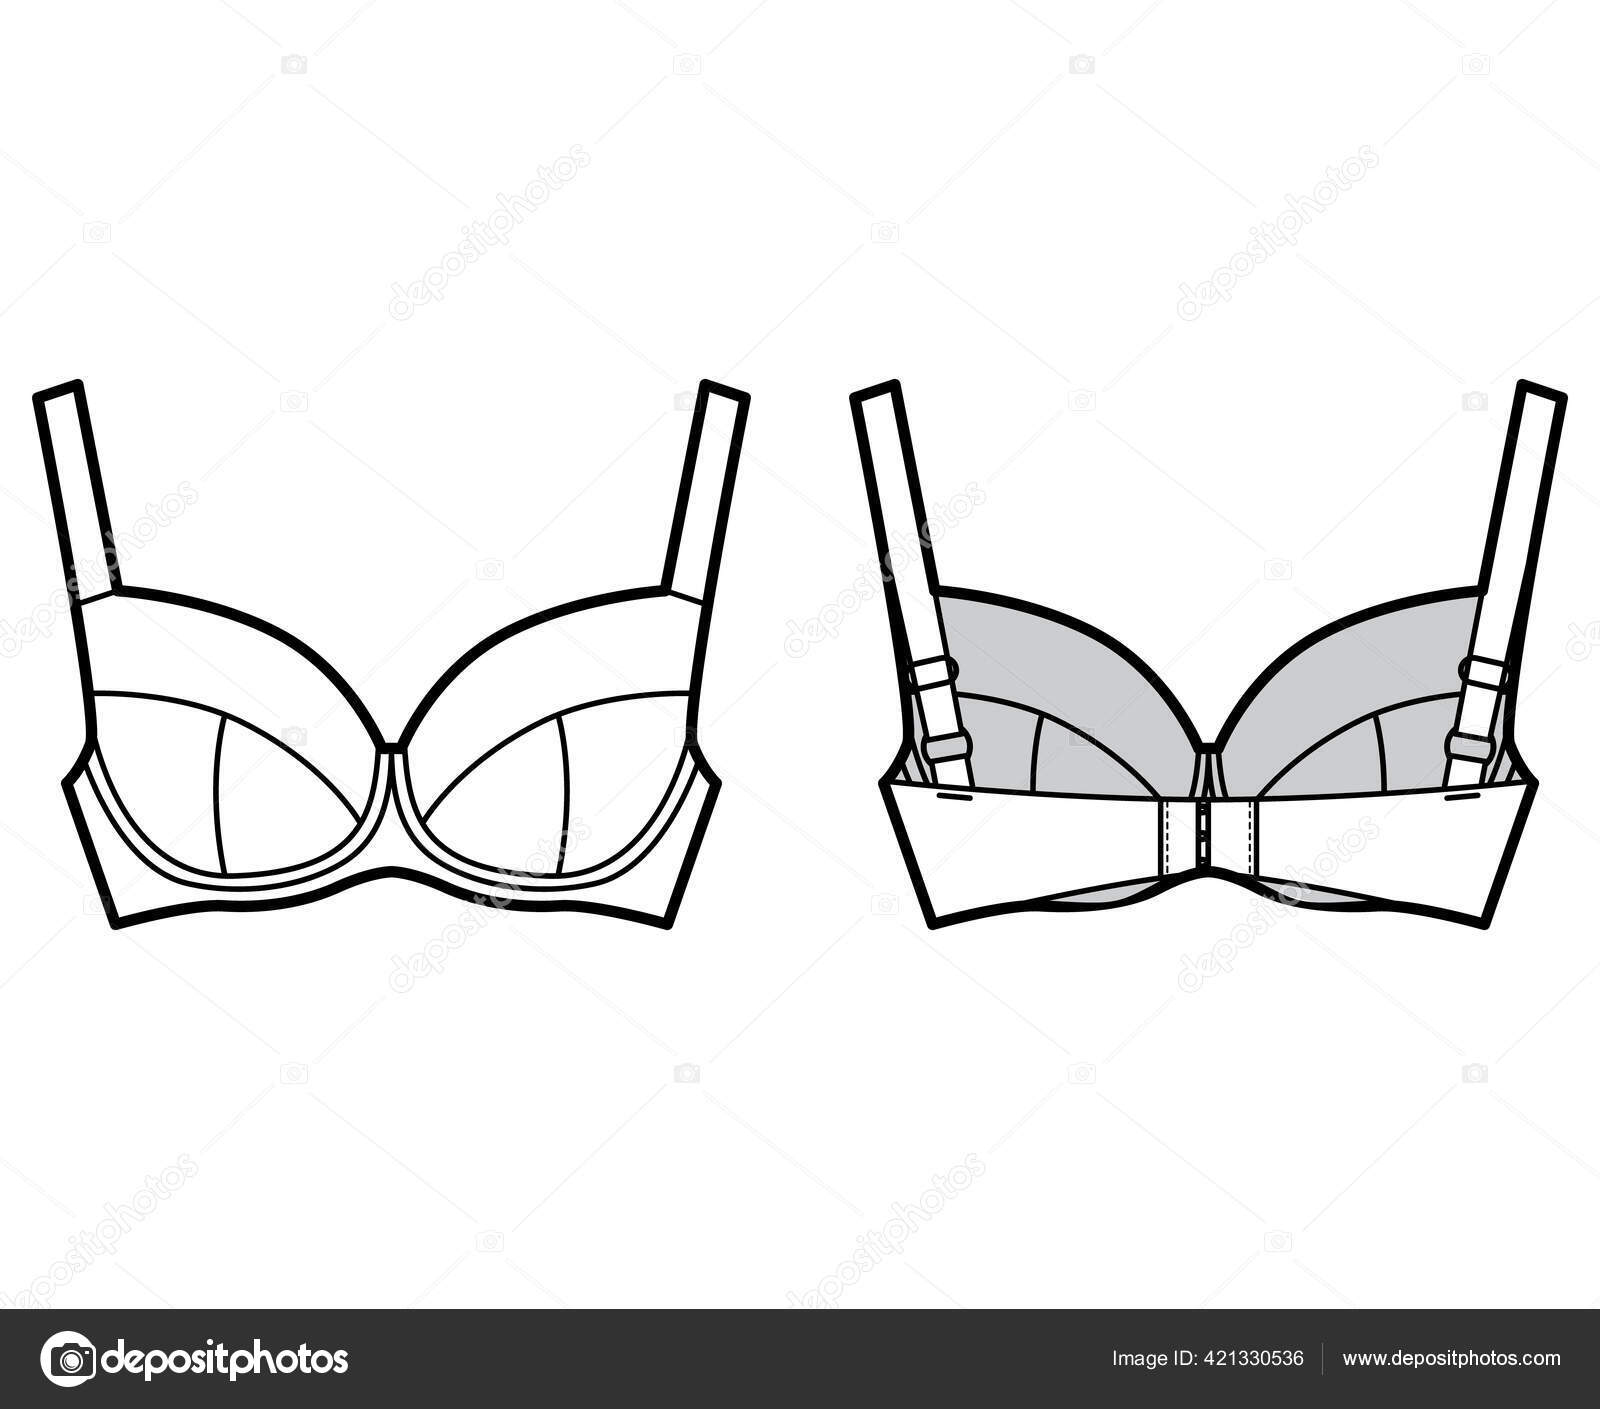 Bra full support lingerie technical fashion illustration with full